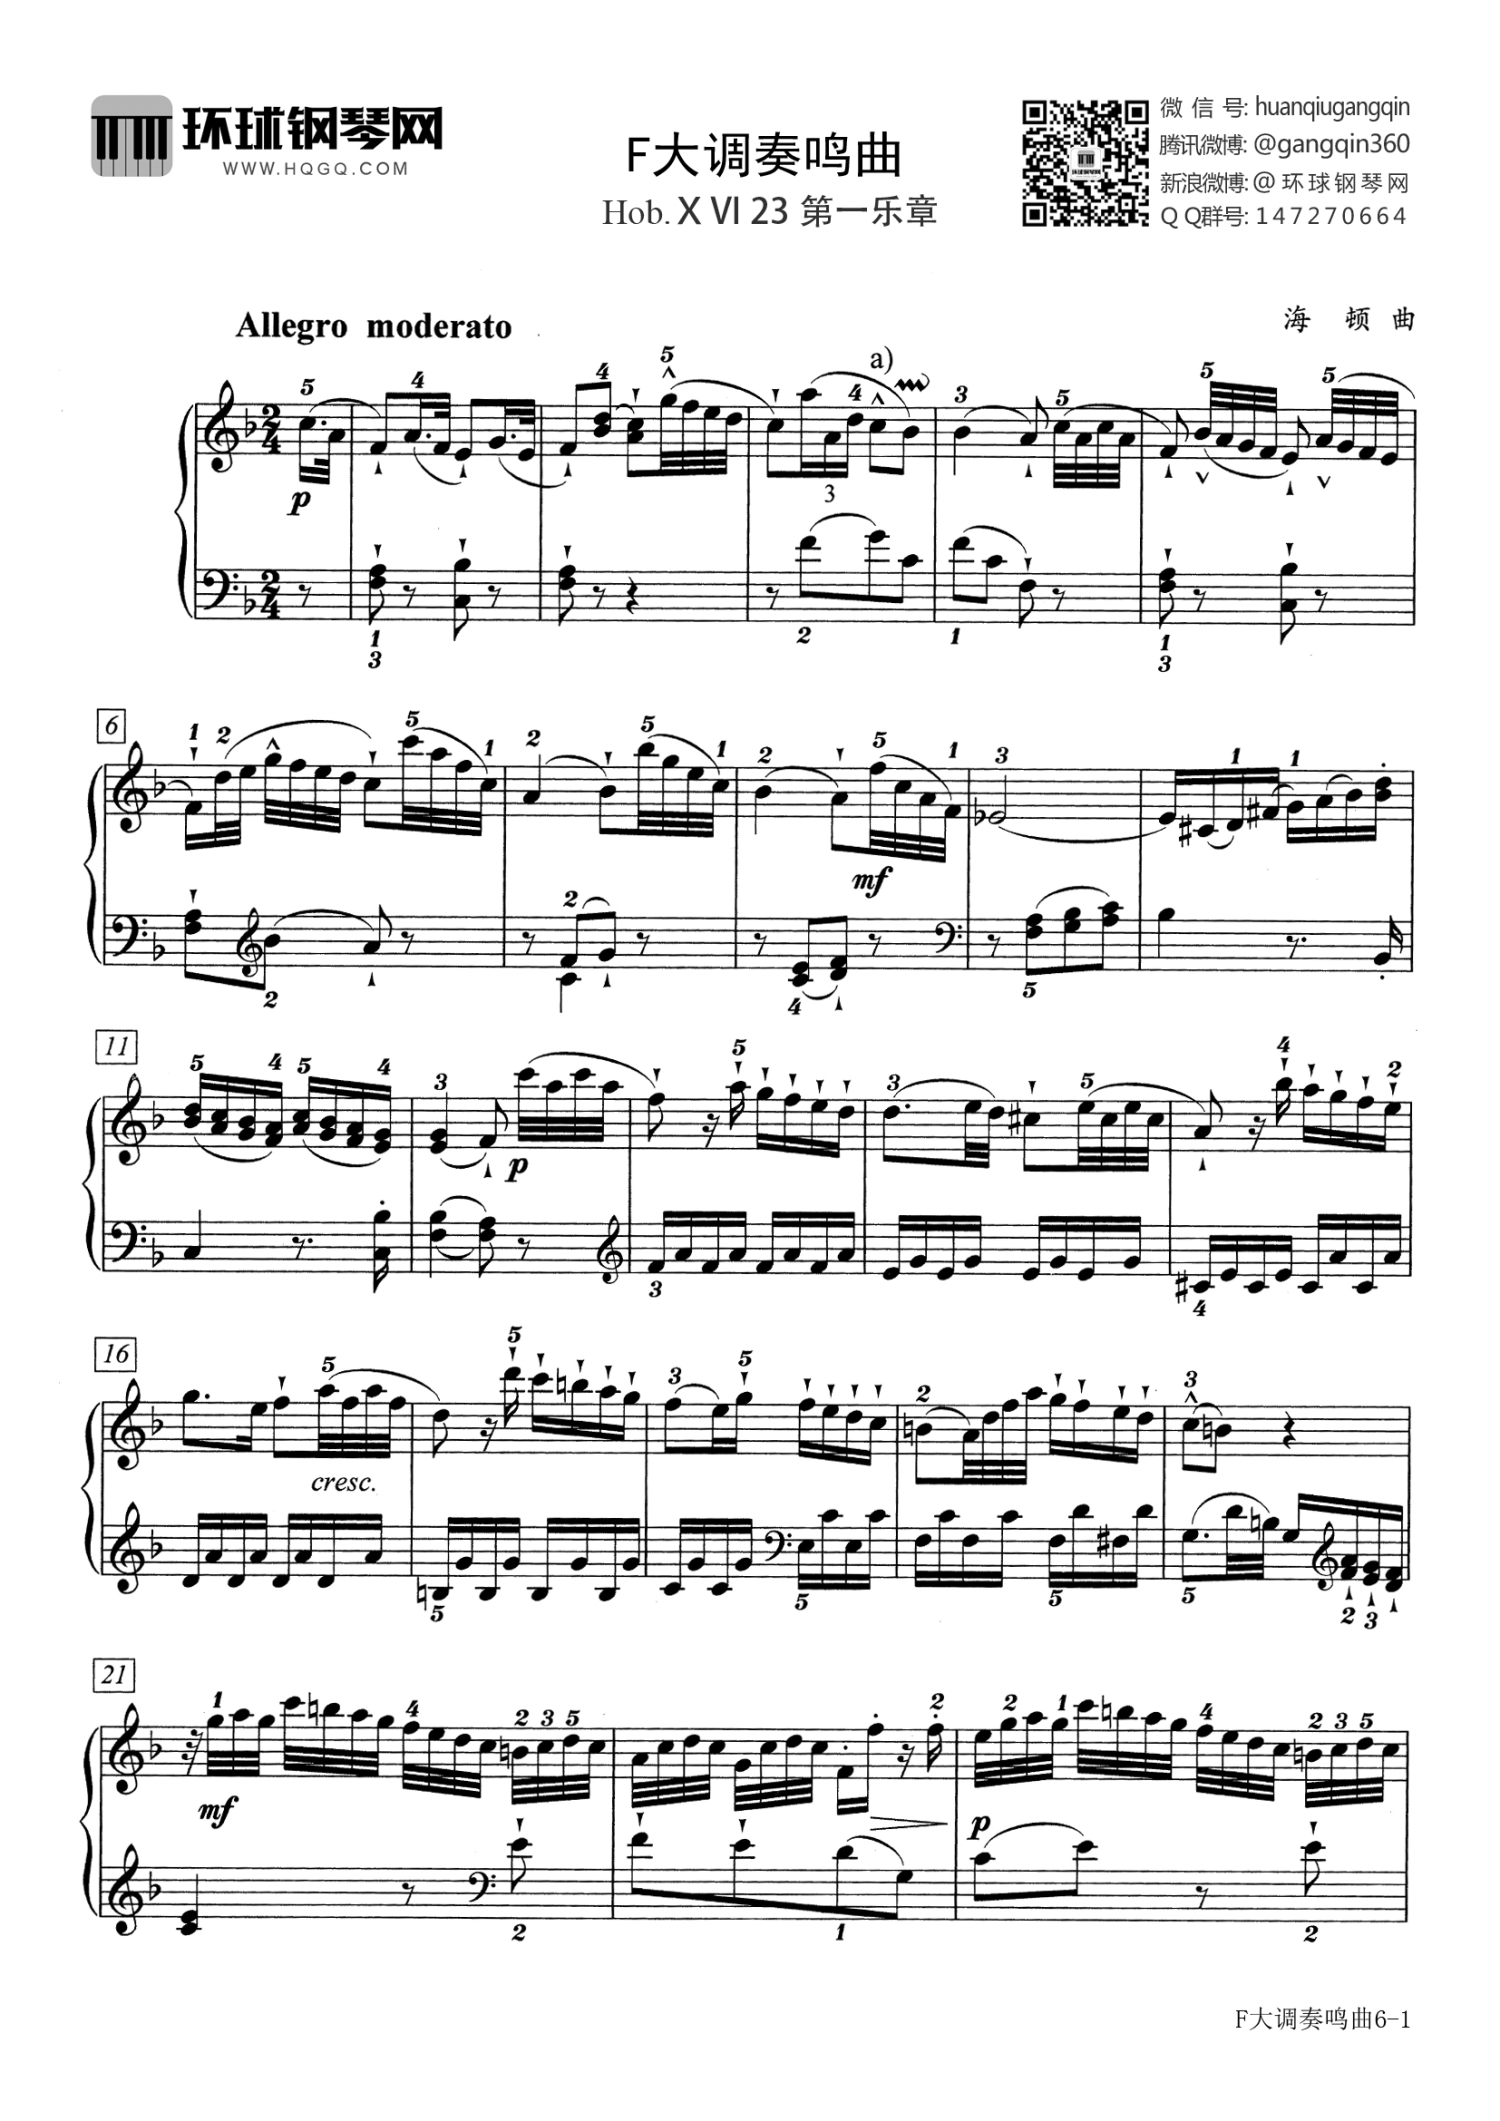 Hob.ⅩⅥ 23 第一乐章《F大调奏鸣曲》钢琴谱第1张